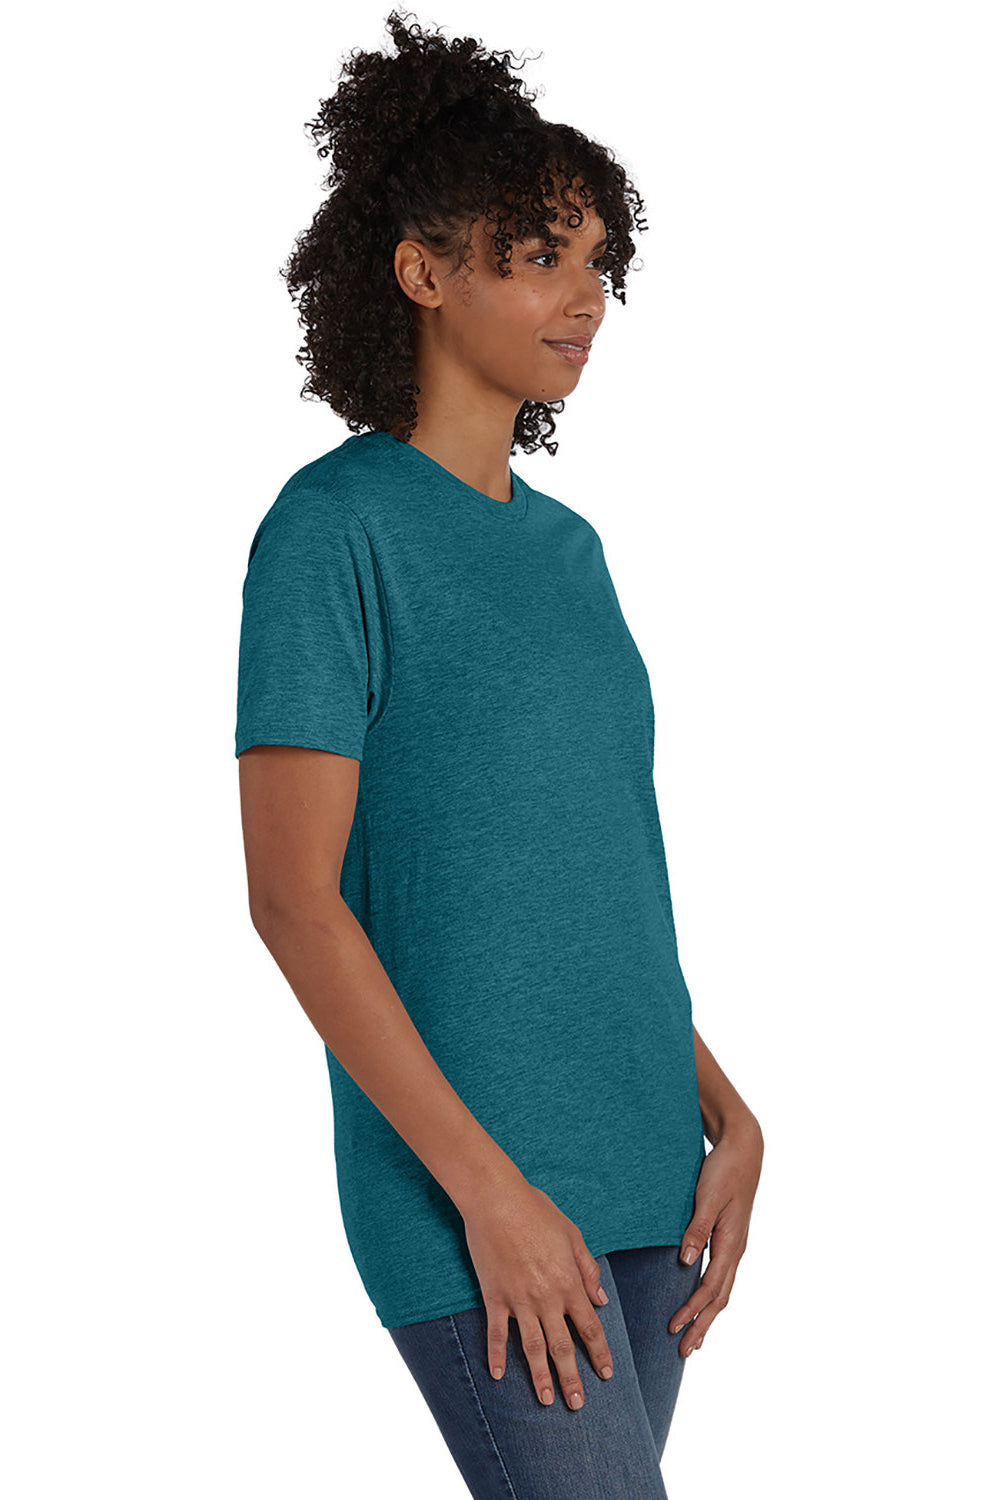 Hanes 4980 Mens Nano-T Short Sleeve Crewneck T-Shirt Heather Jade Pine 3Q